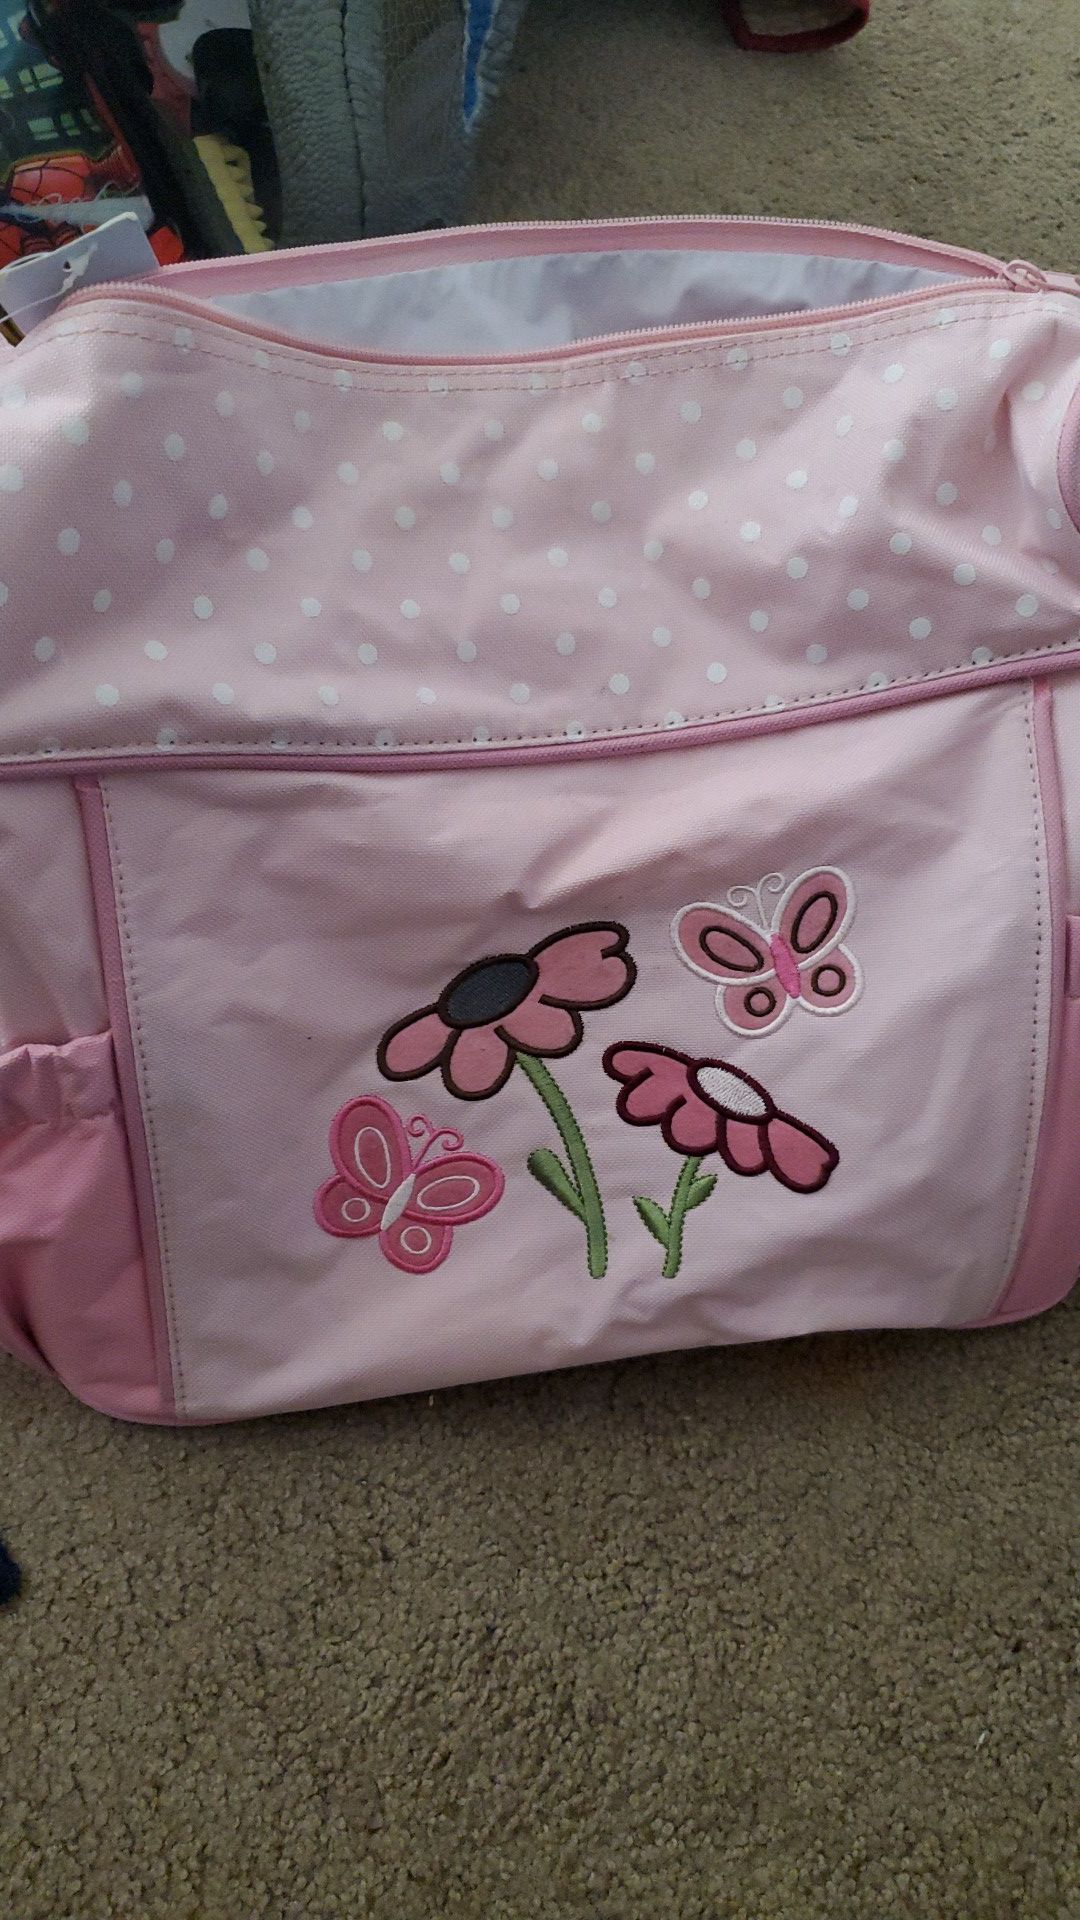 Pink baby girl carrying diaper bag